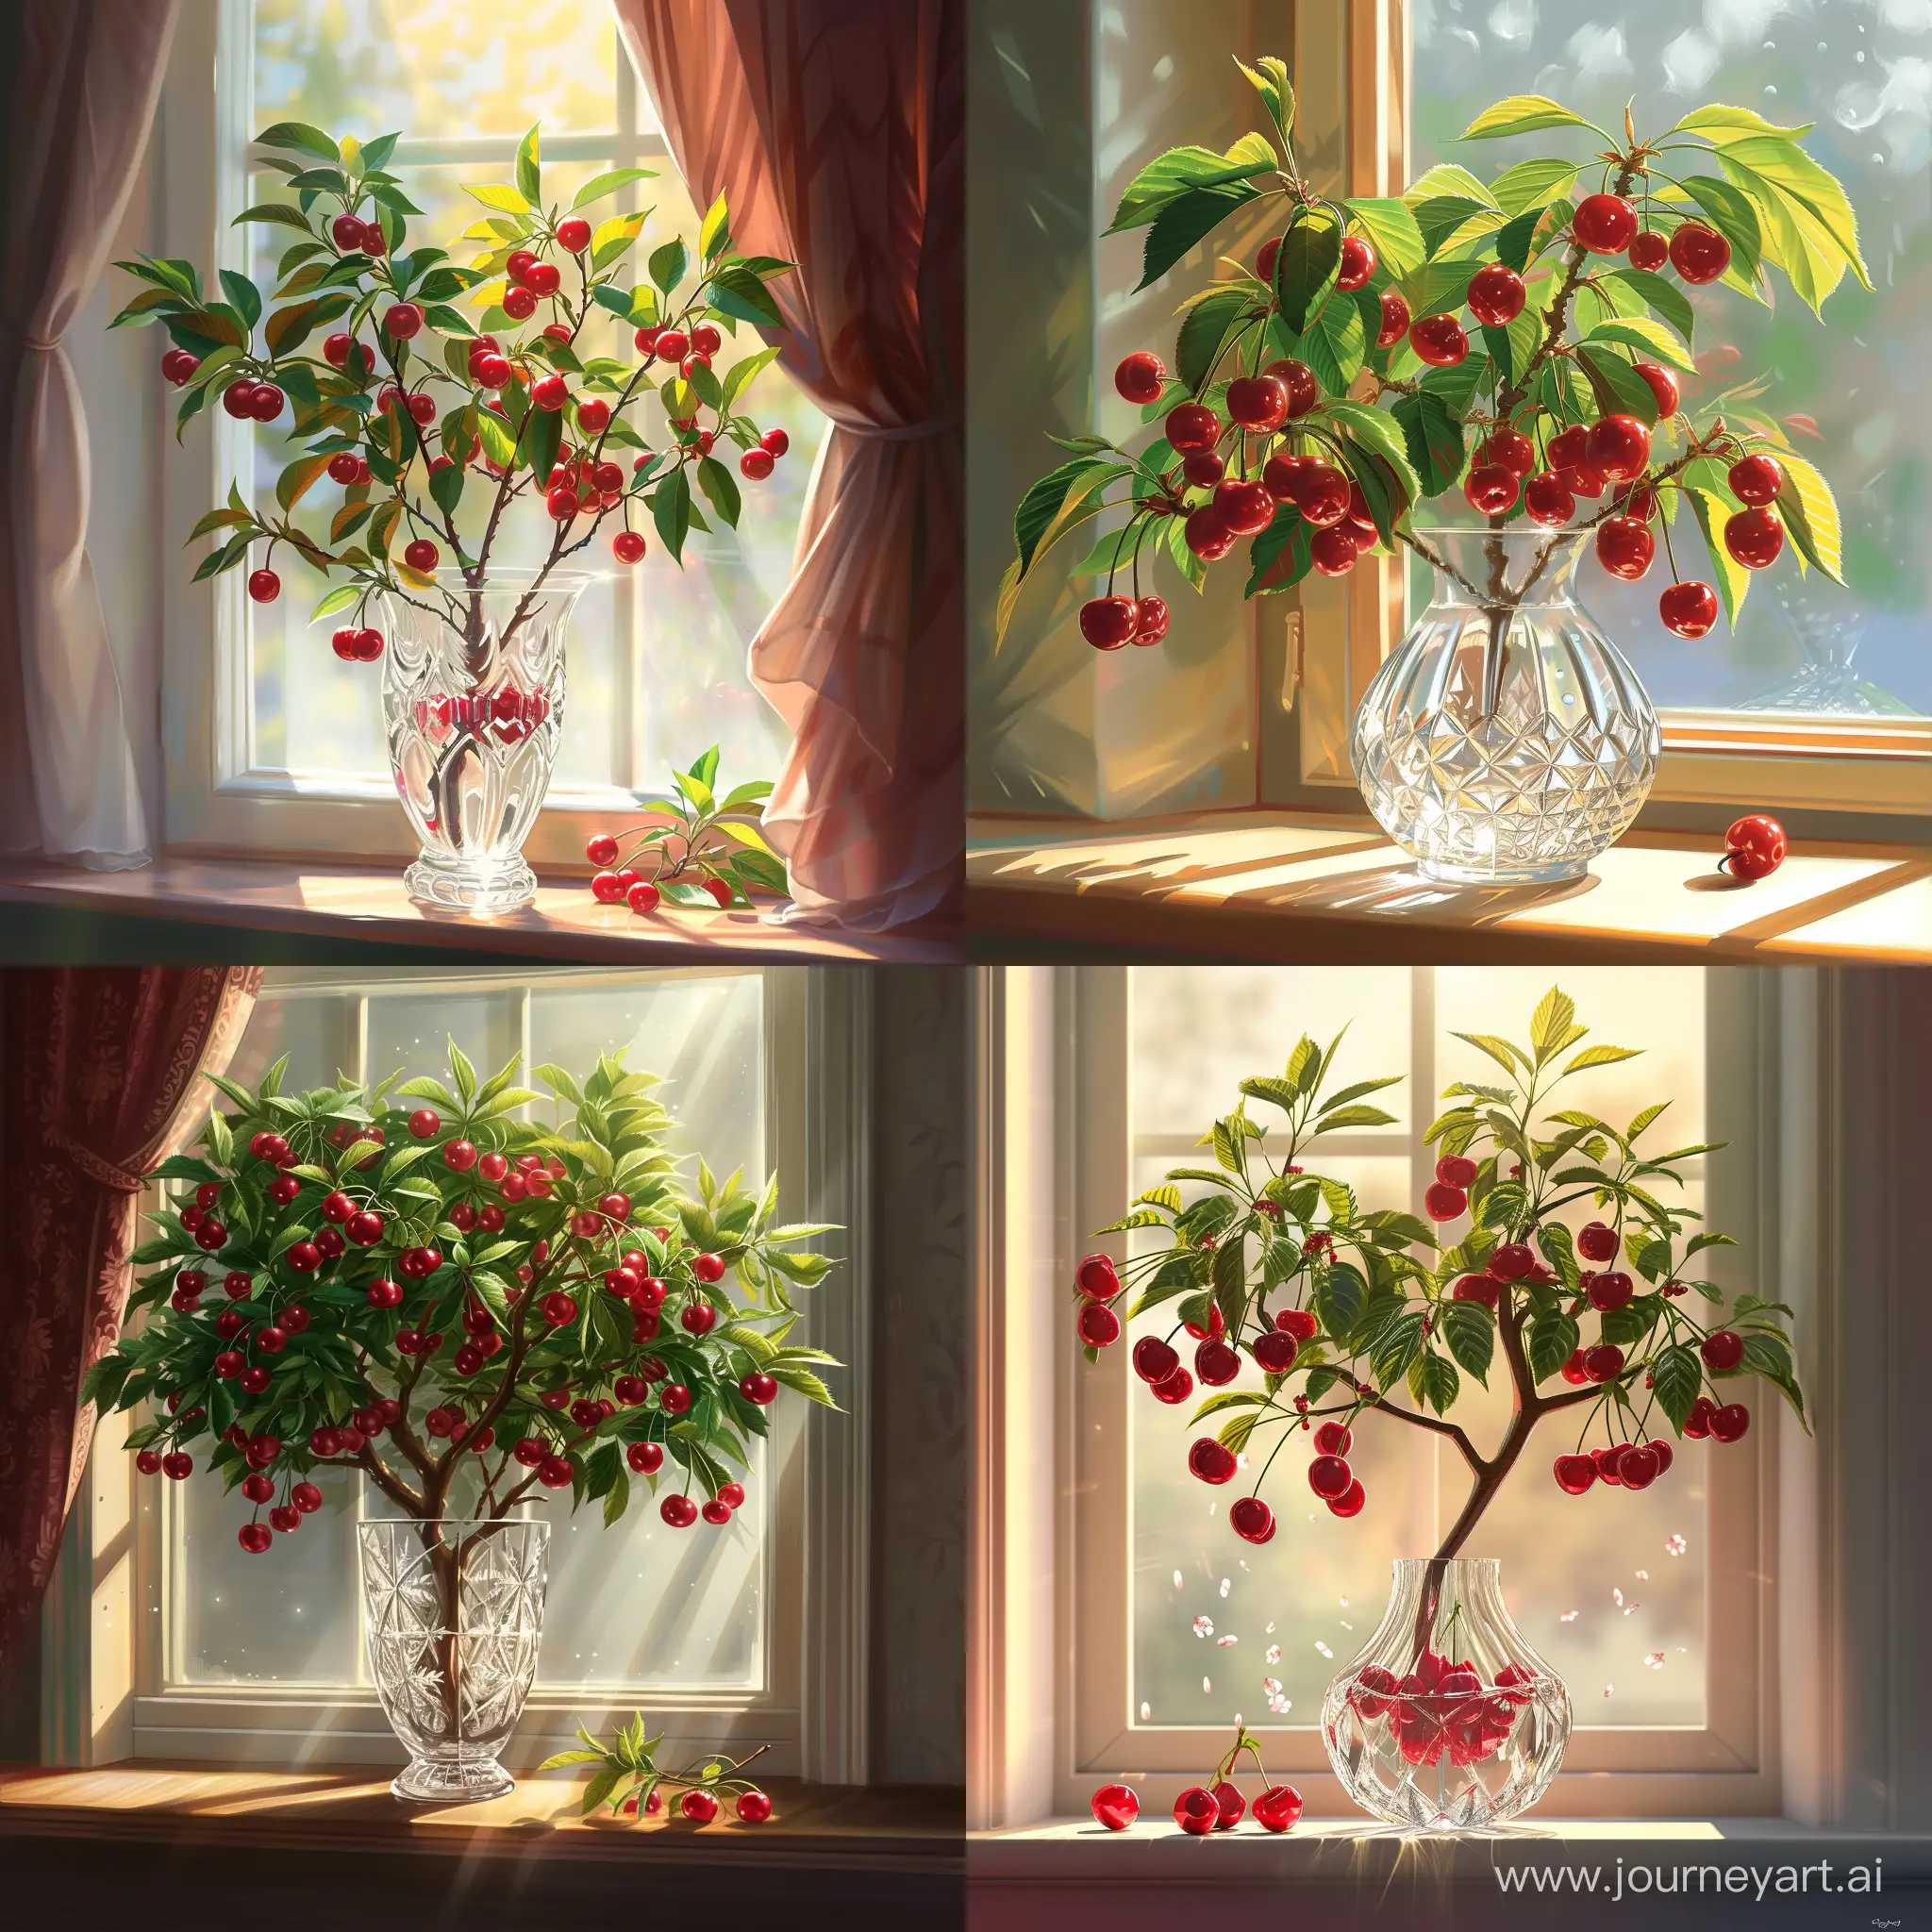 Sunlit-Illustration-of-Ripe-Cherry-Tree-in-Crystal-Vase